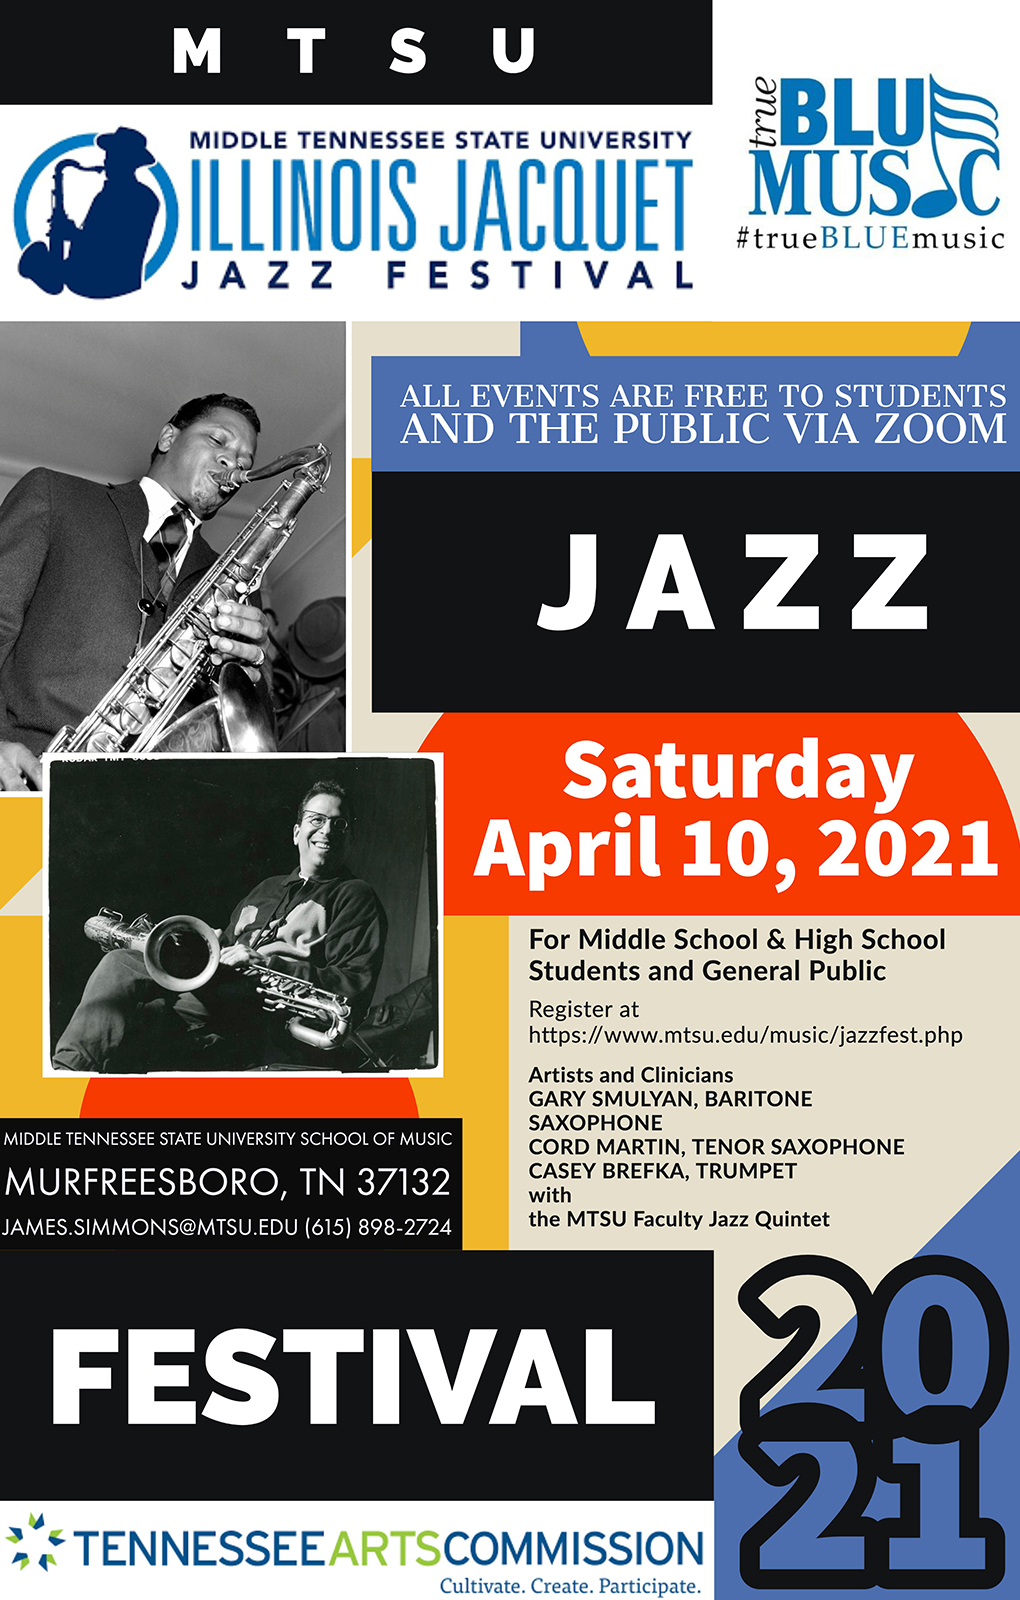 MTSU 2021 Illinois Jacquet Jazz Festival poster